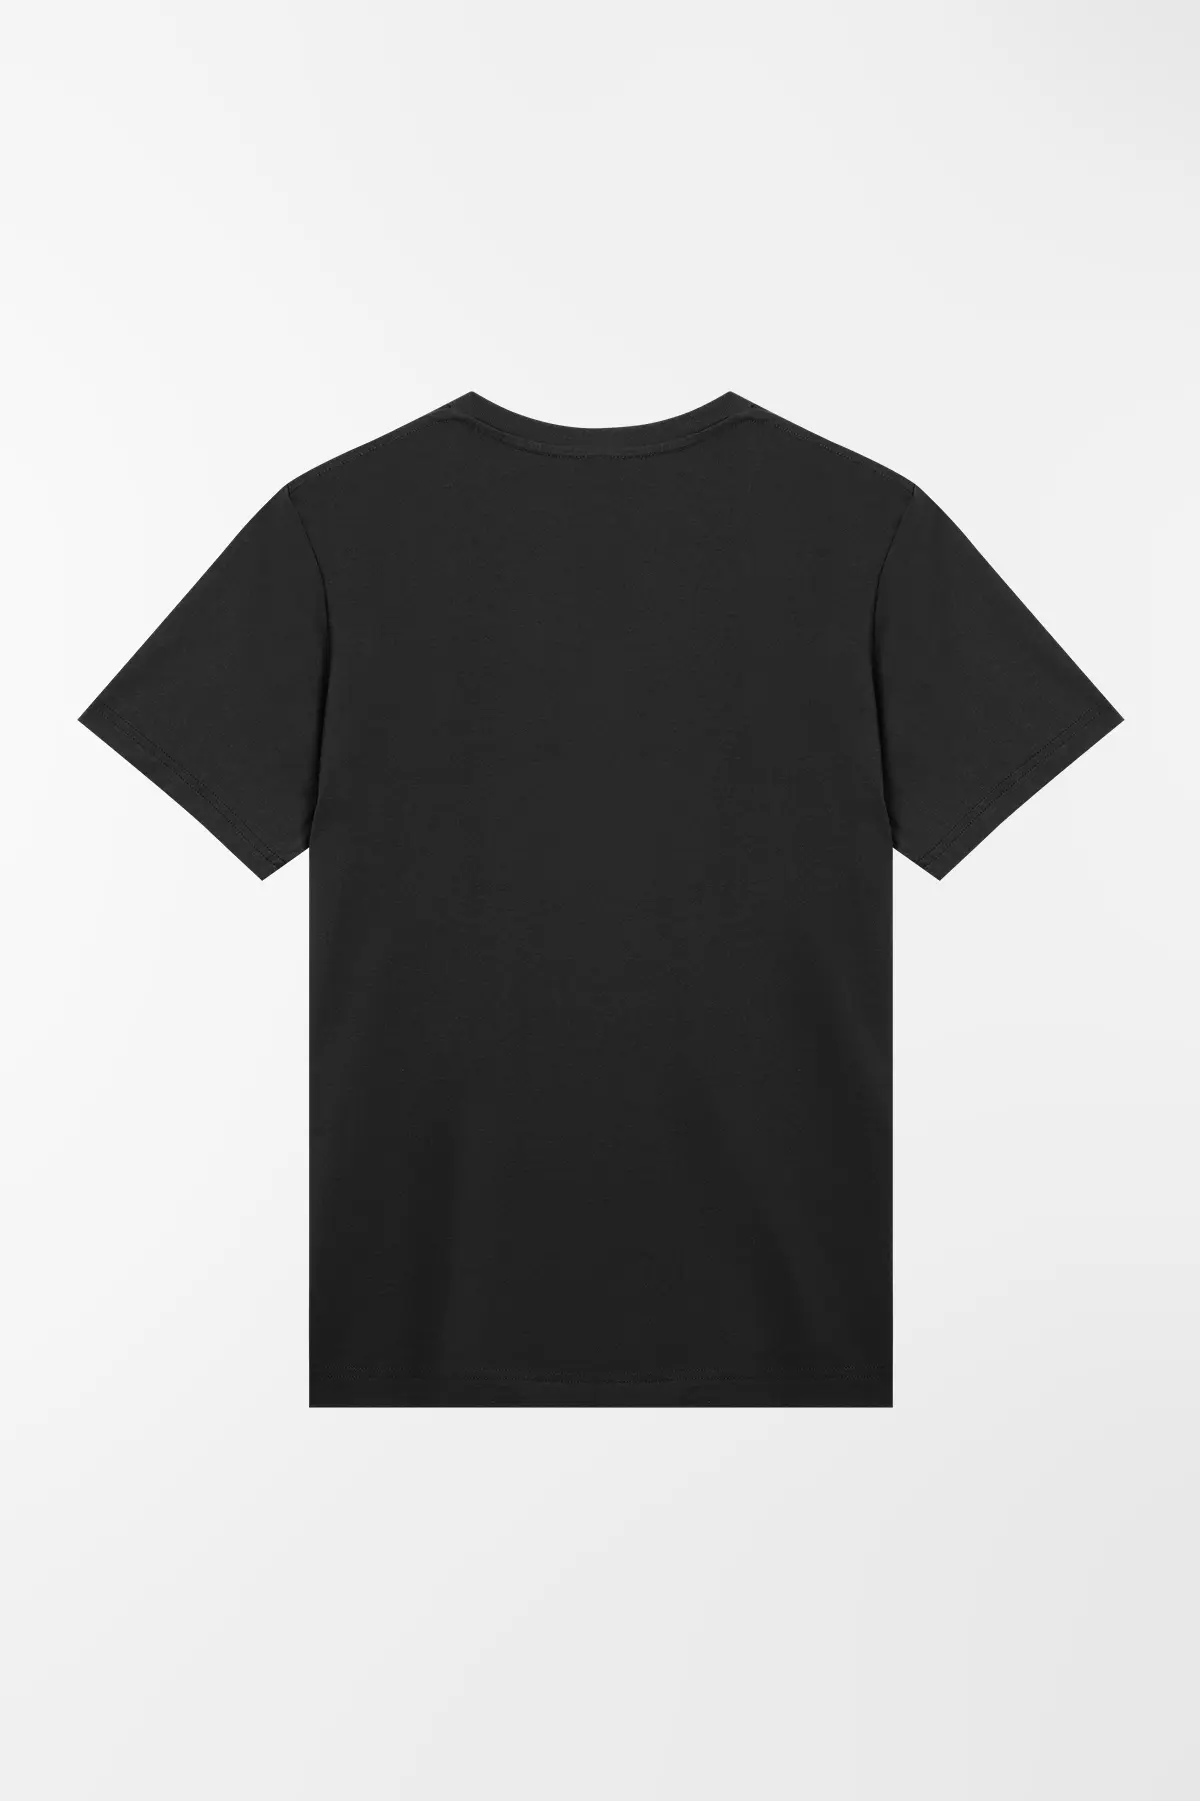 Marisa & Reimu • Touhou T-Shirt Black